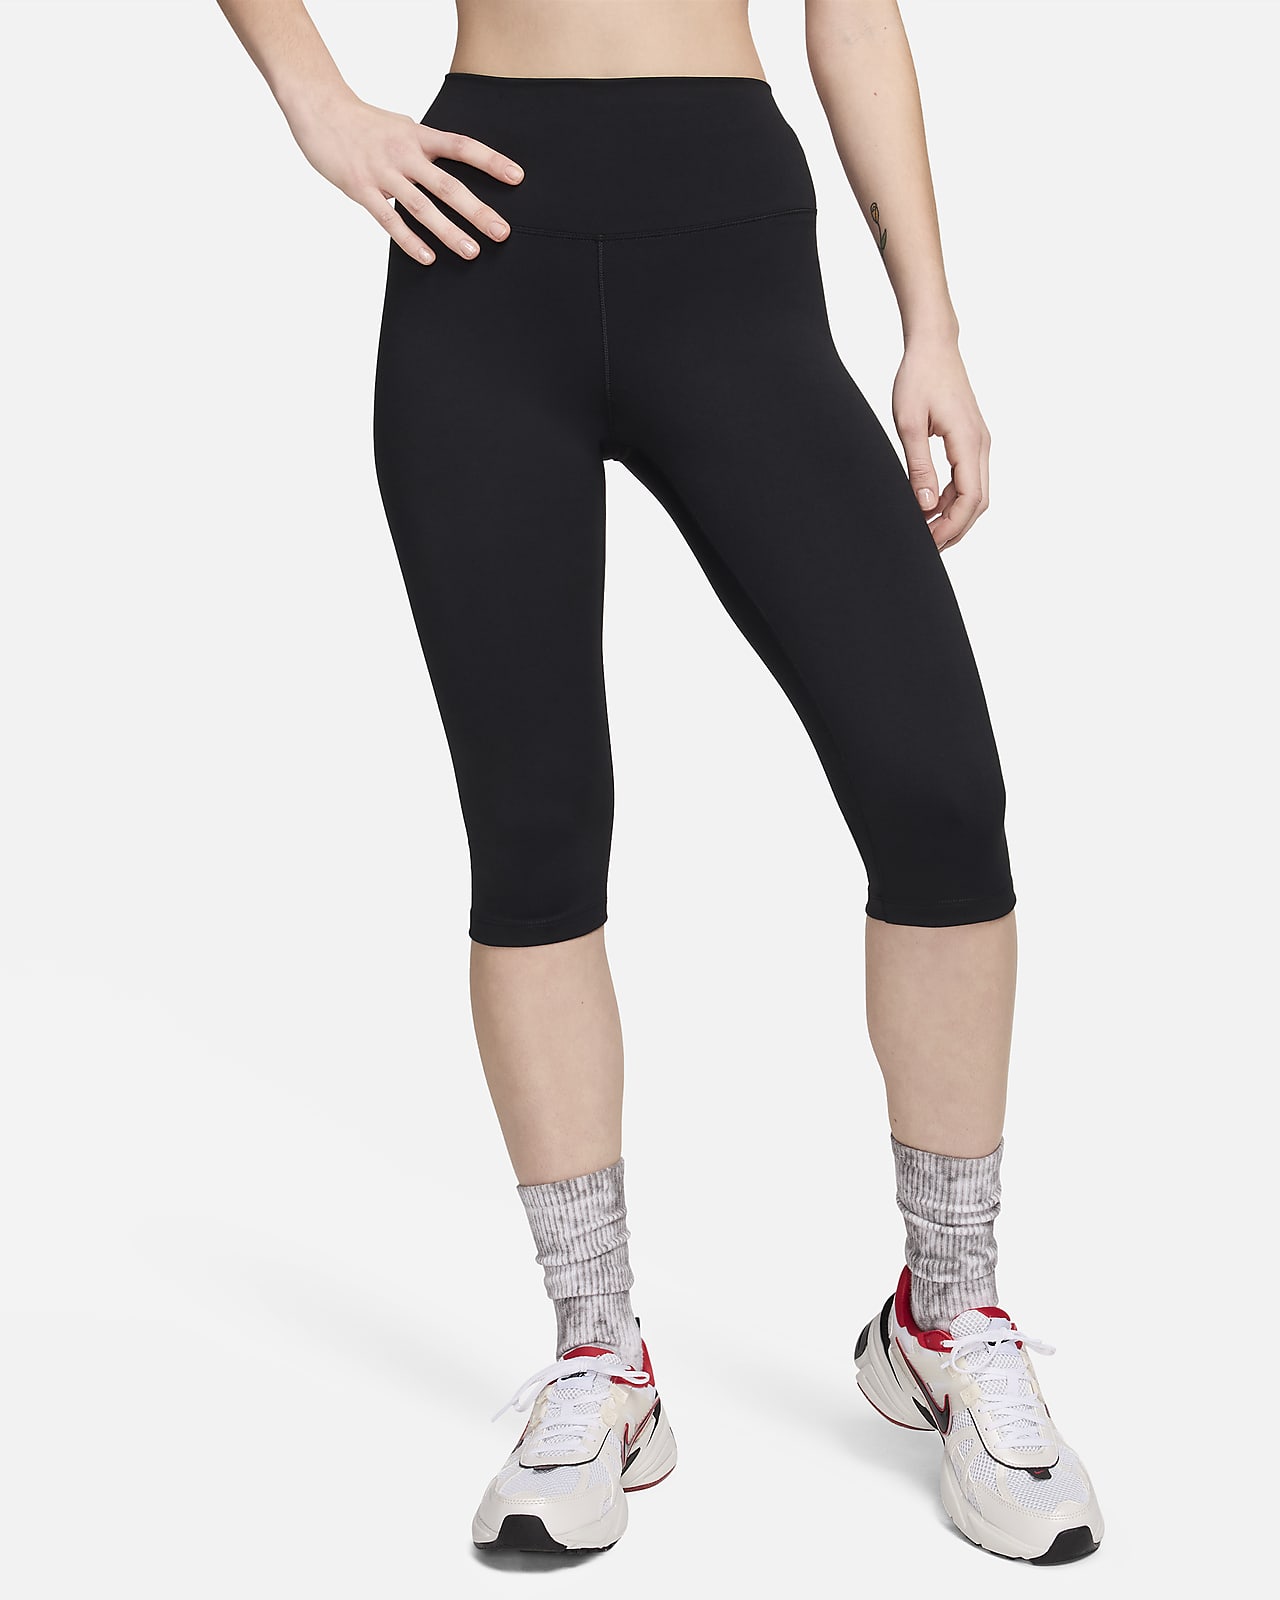 Højtaljet Nike One-caprileggings til kvinder